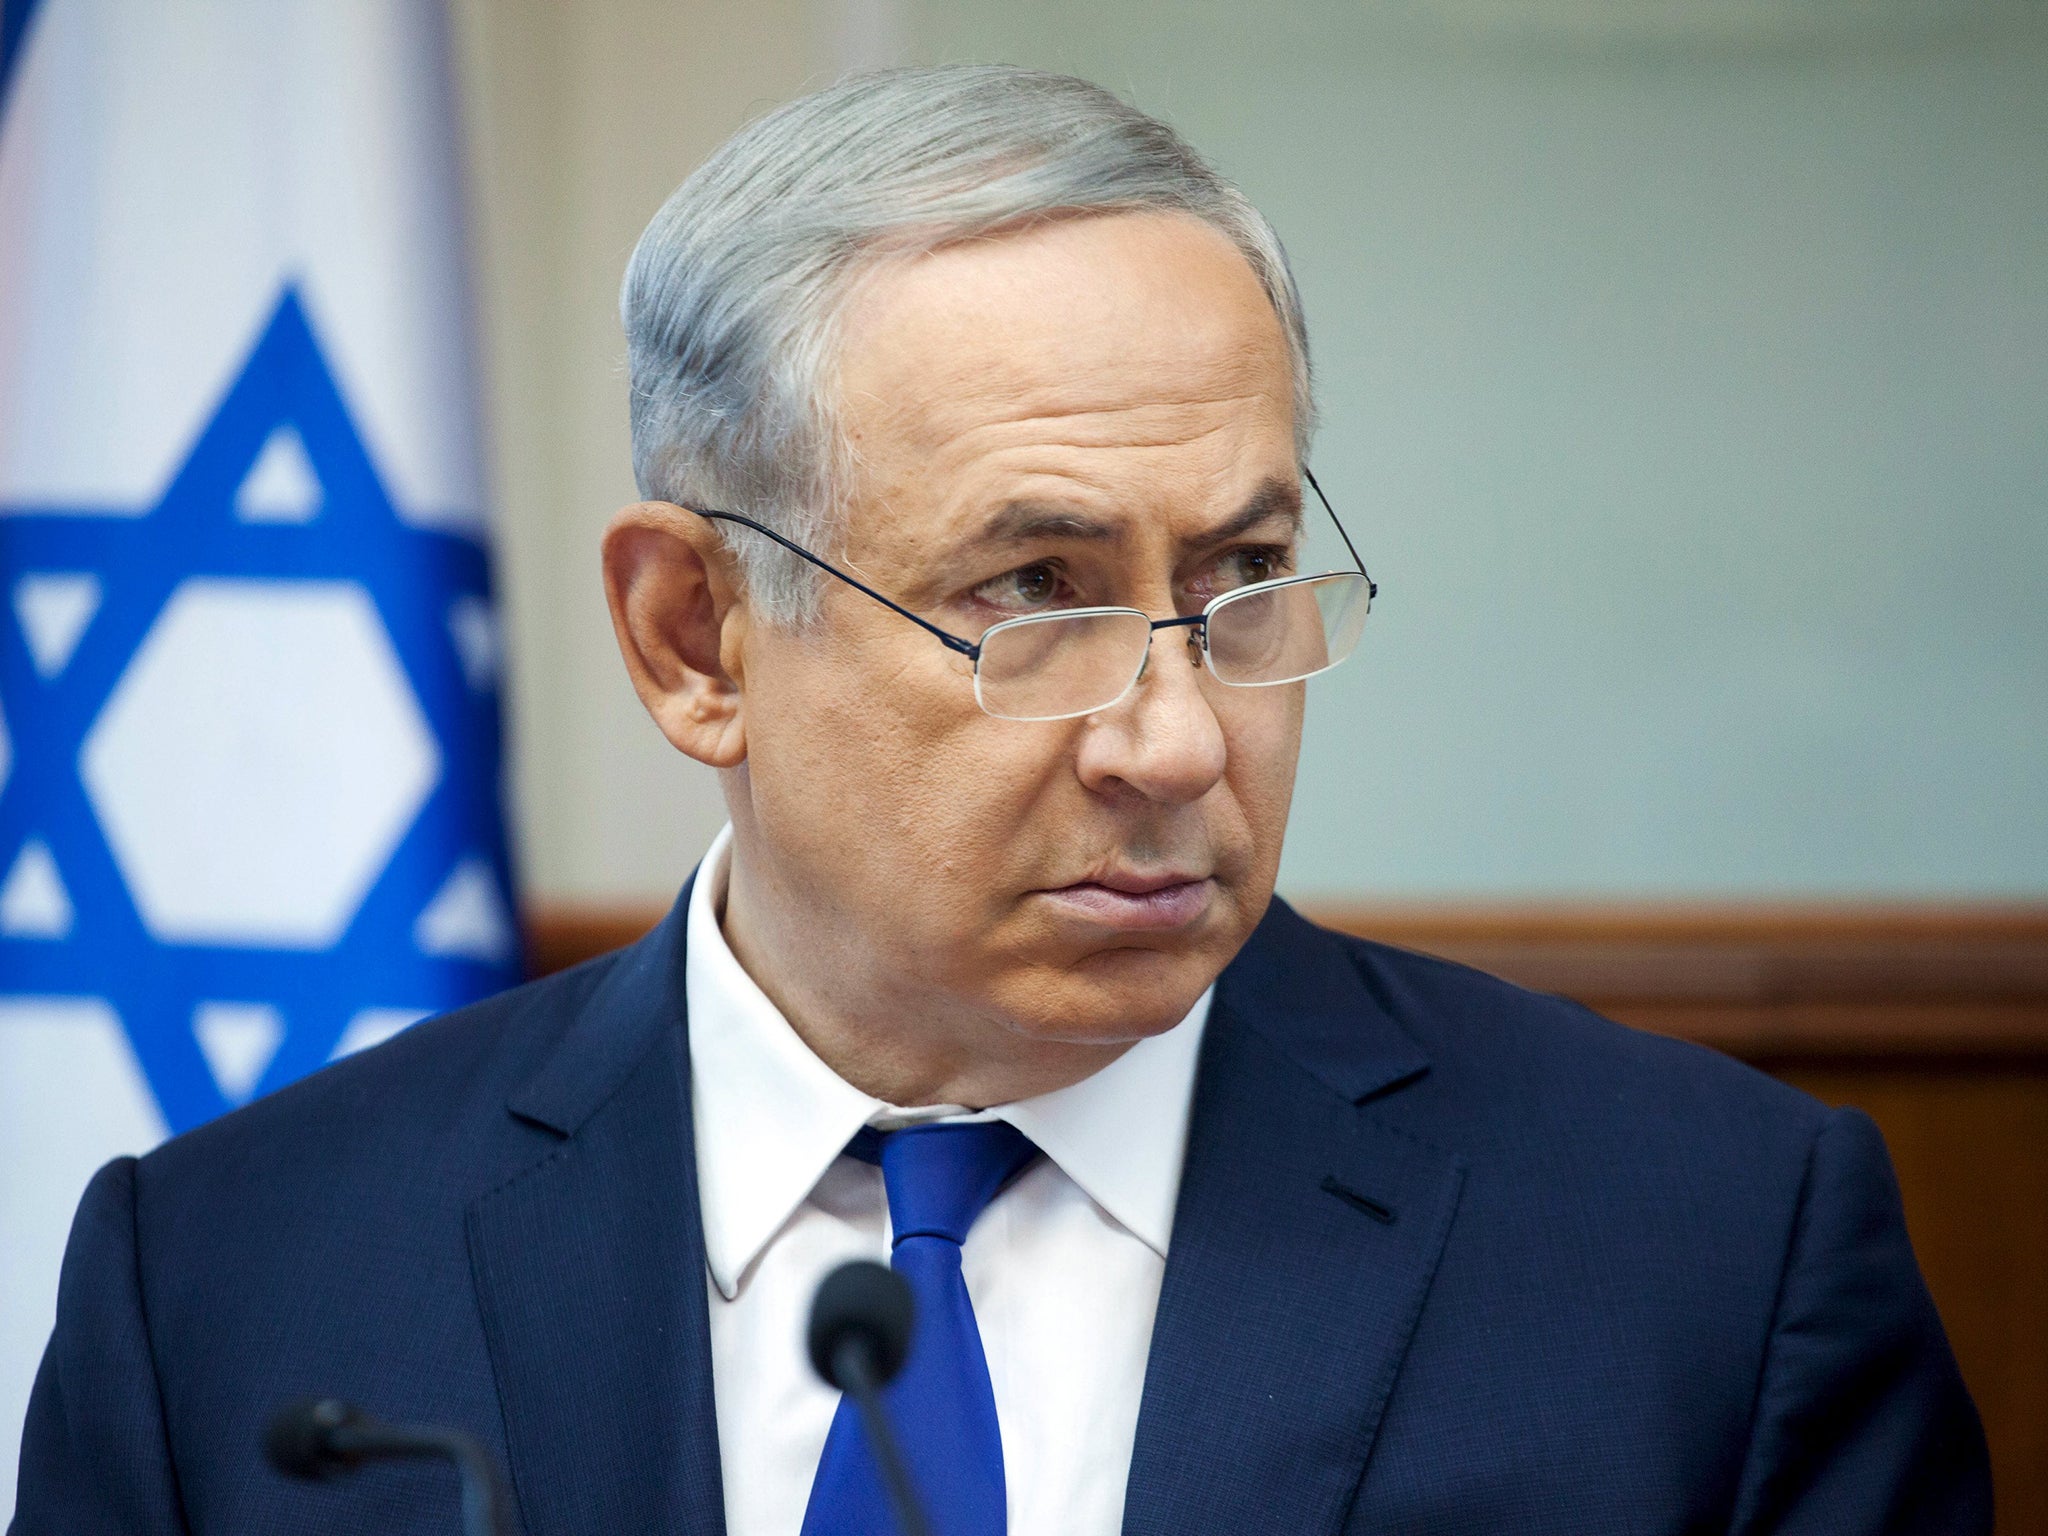 Israeli Prime Minister Benjamin Netanyahu attends a weekly cabinet meeting in Jerusalem